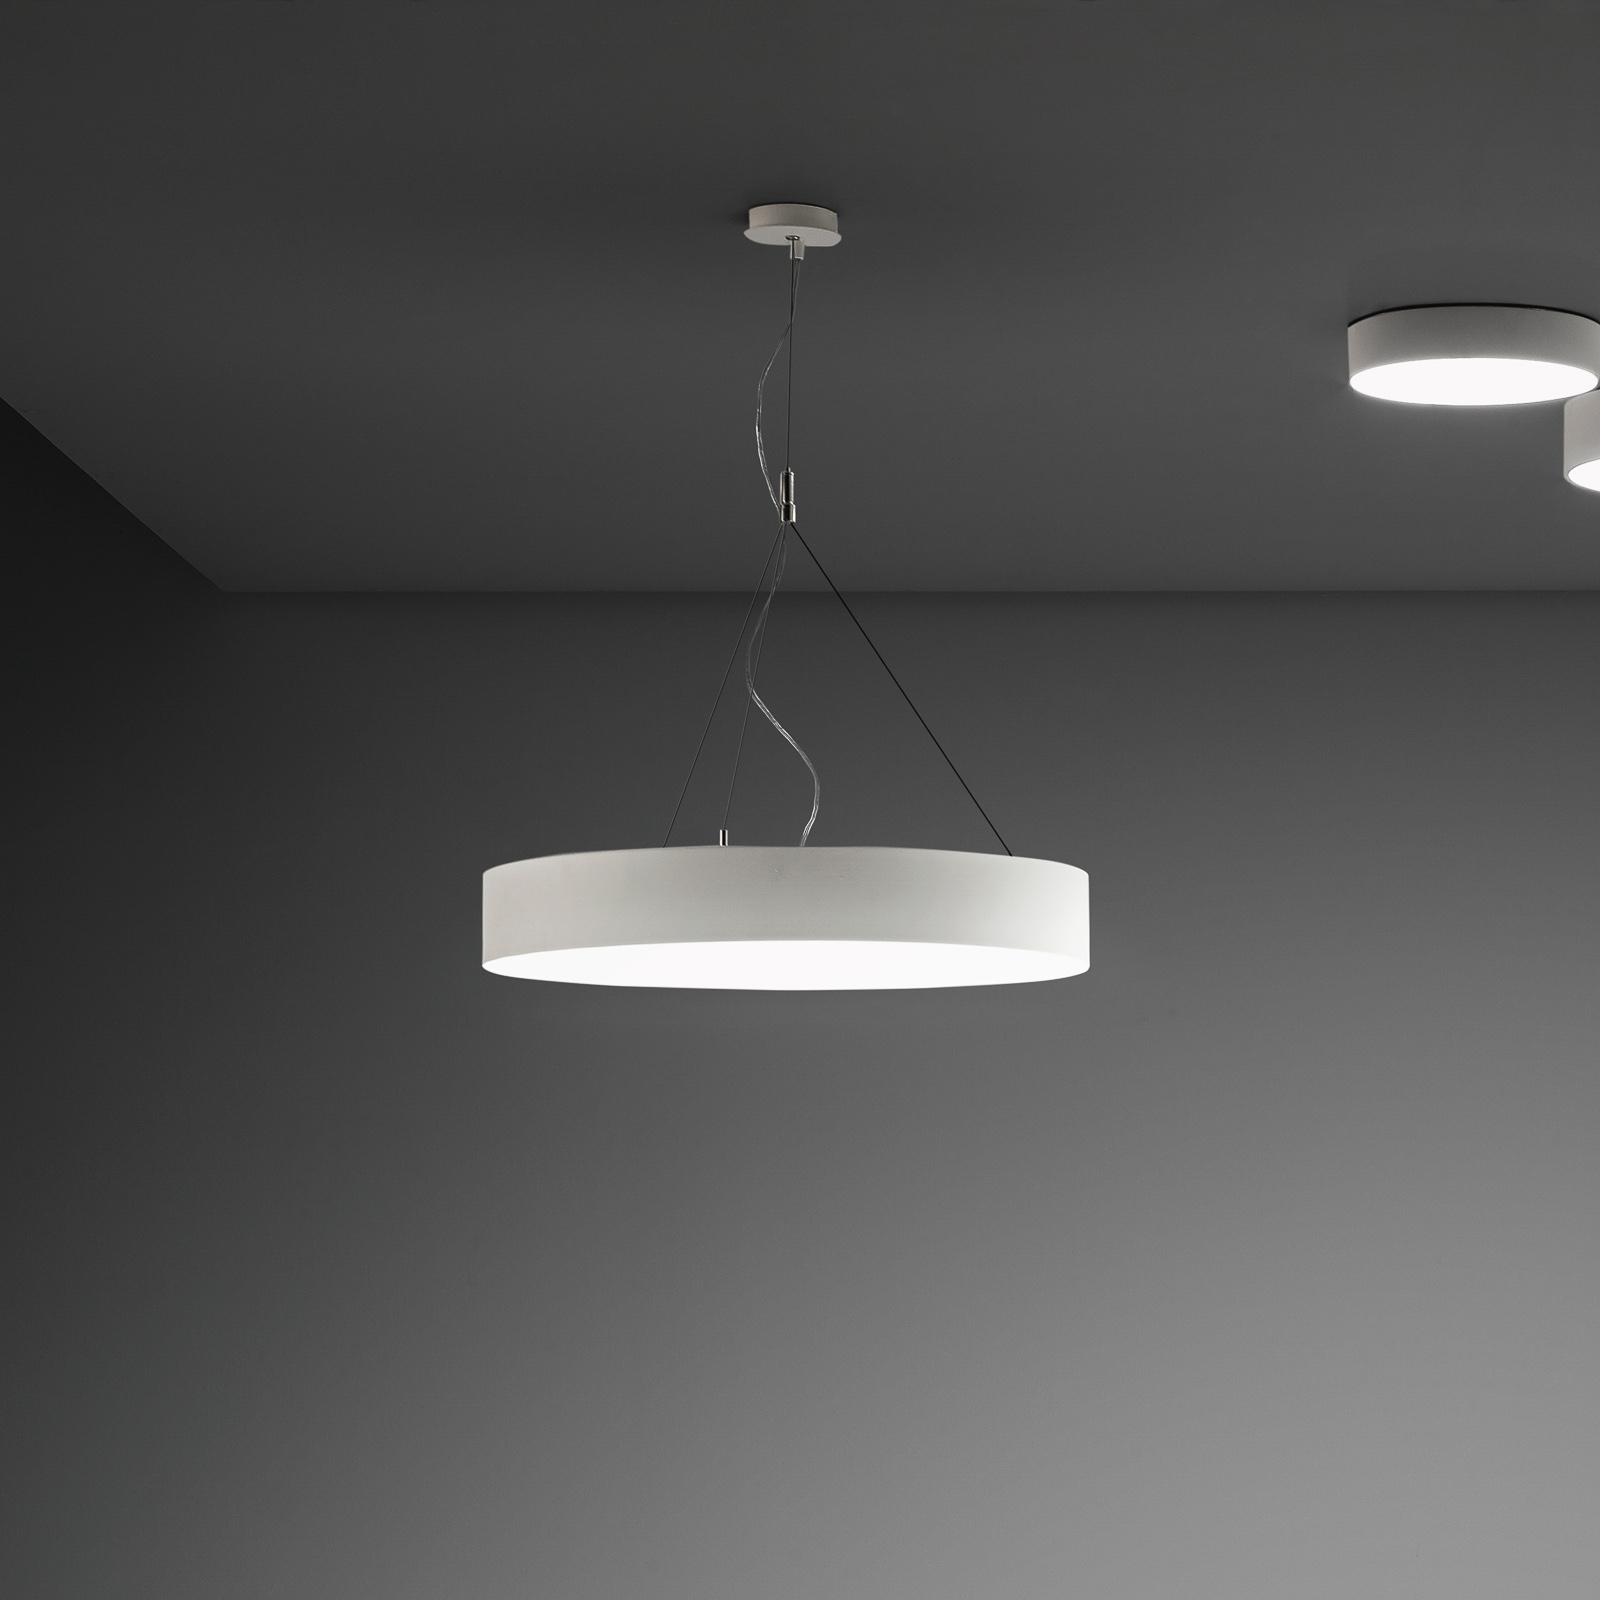 LEDS-C4 Caprice LED ceiling light